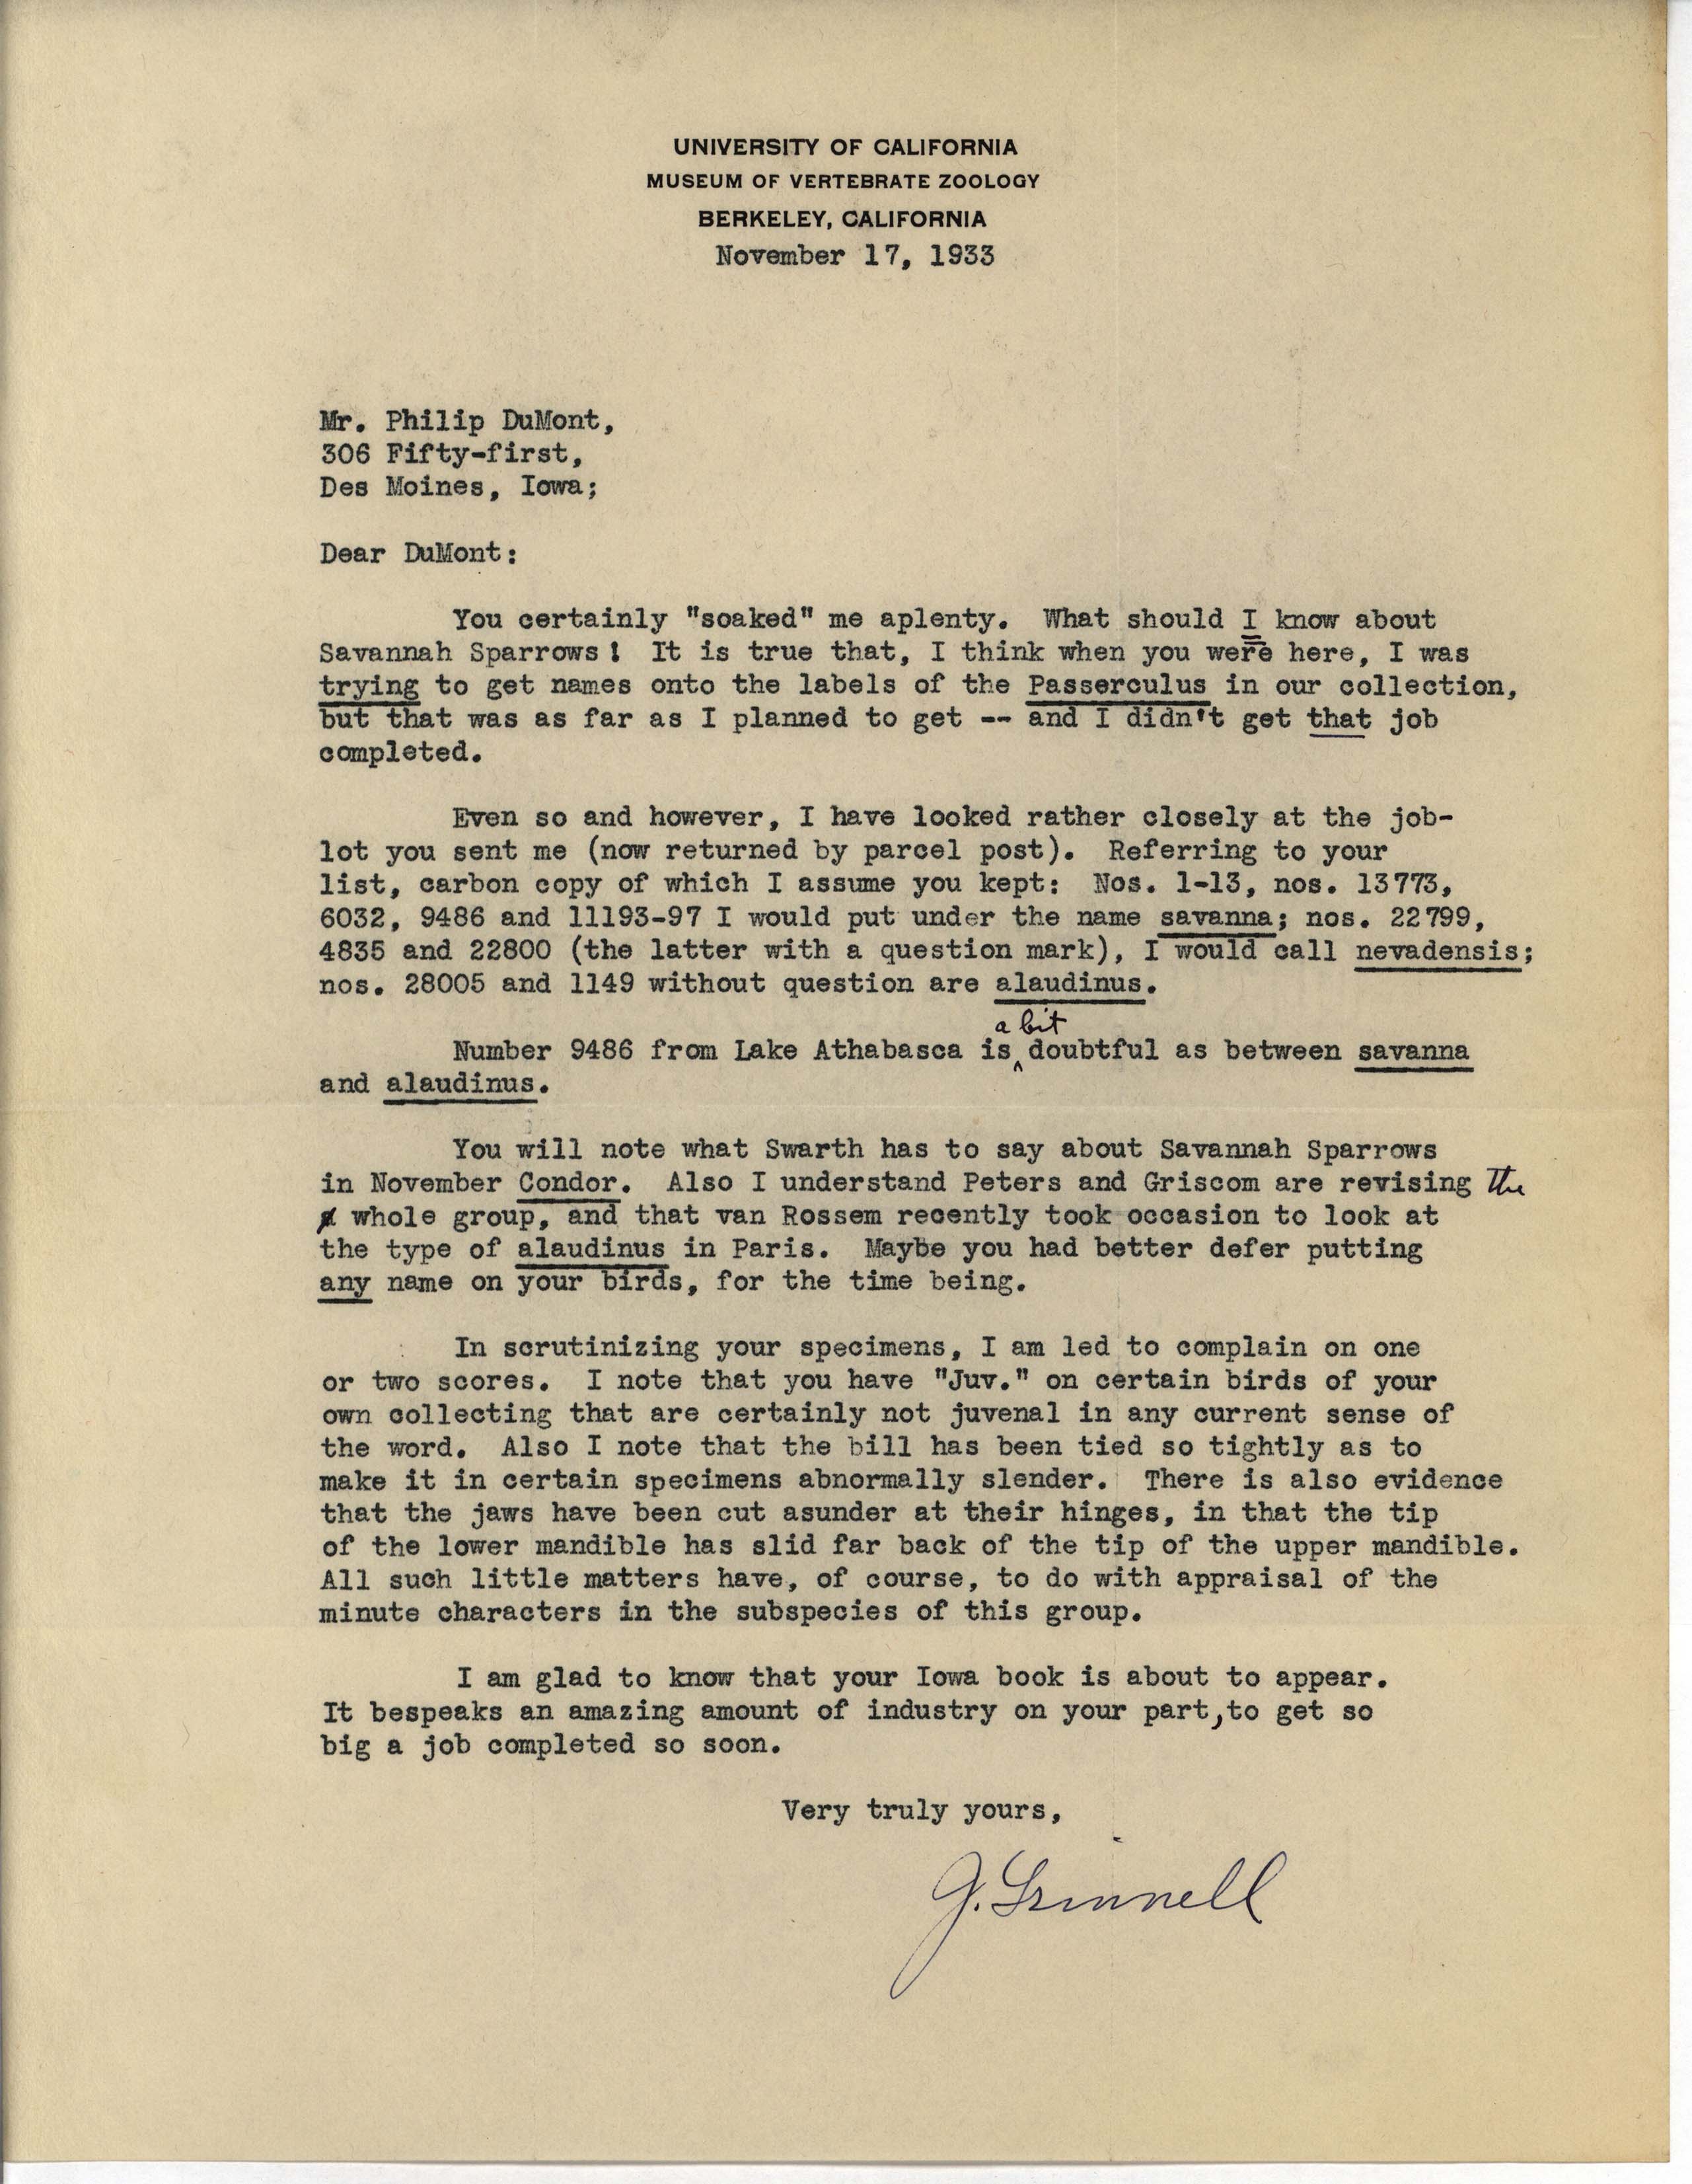 Joseph Grinnell letter to Philip DuMont regarding Savannah Sparrow identification, November 17, 1933